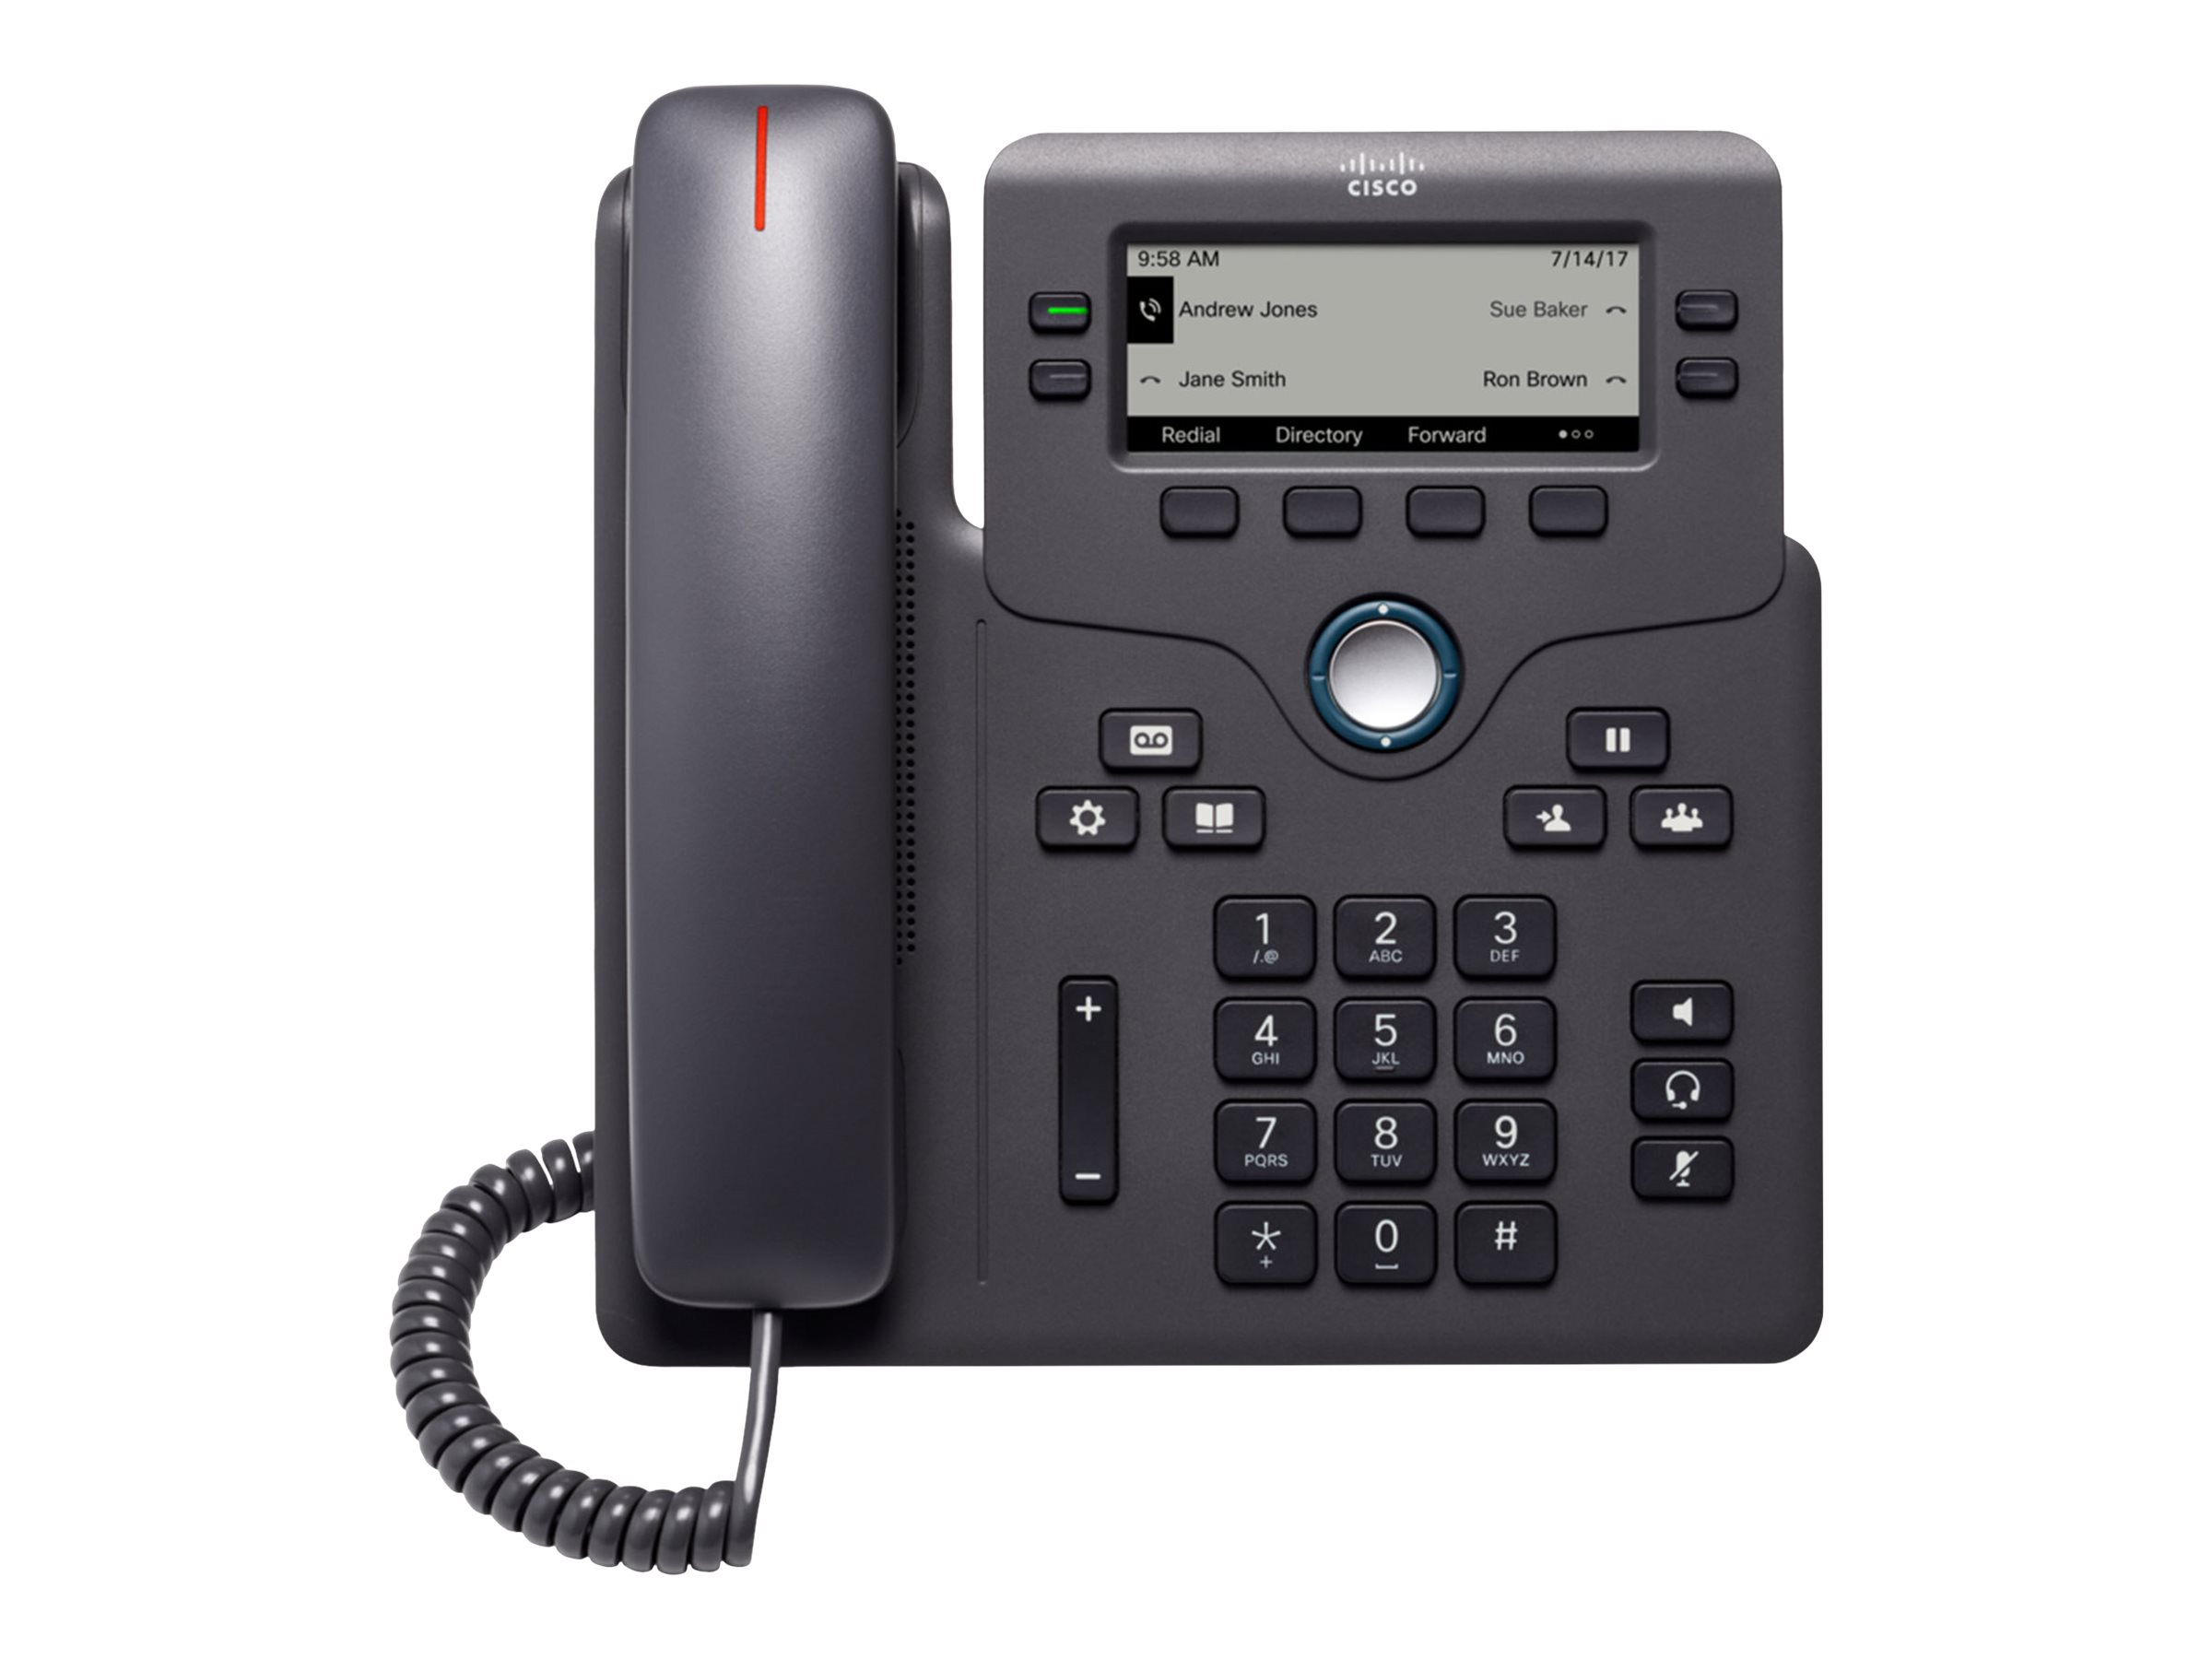 Cisco IP Phone 6841 - VoIP-Telefon - SIP, SRTP - 4 Leitungen - holzkohlefarben